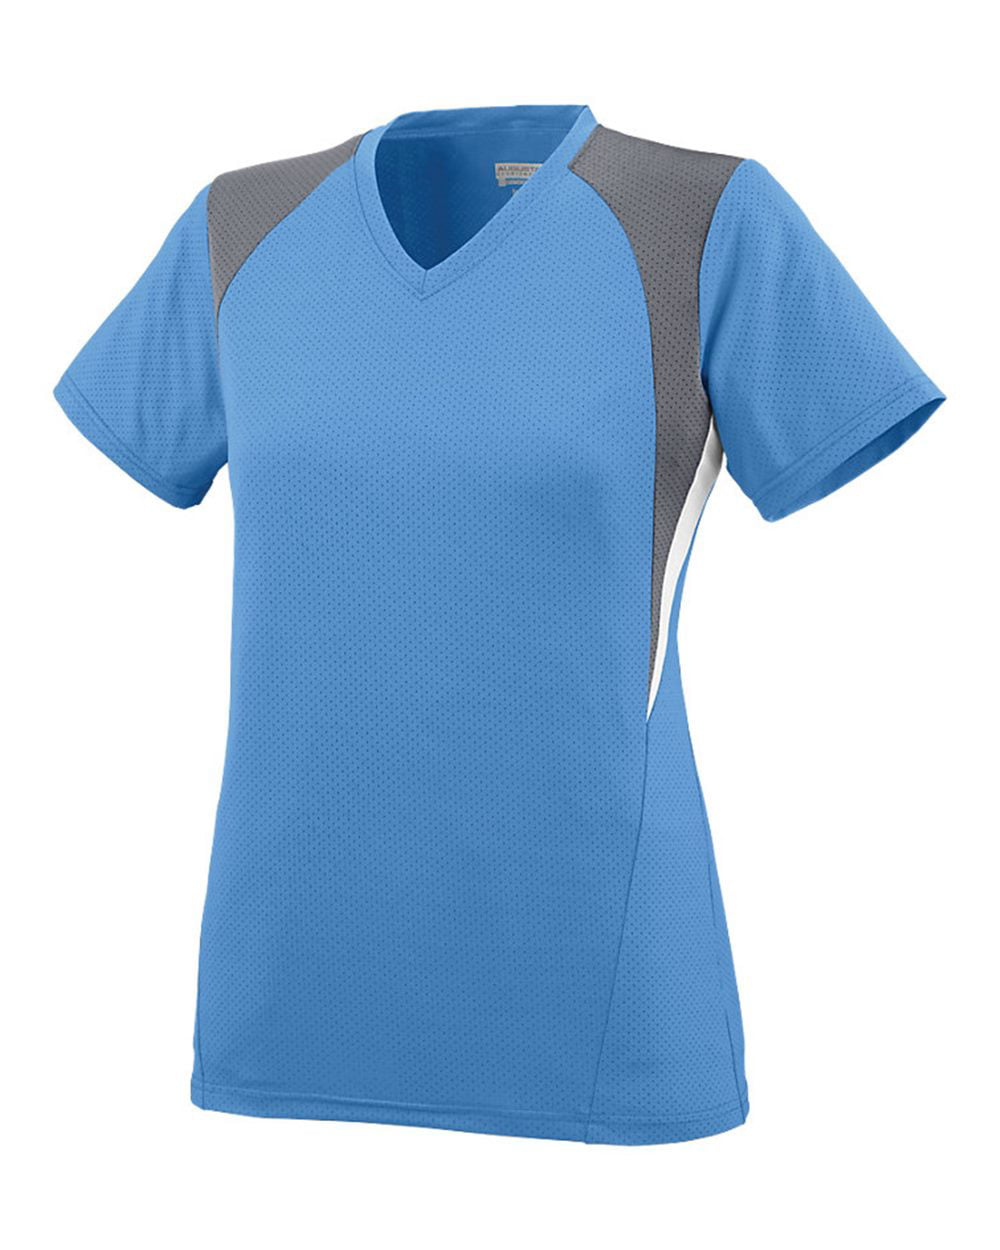 Augusta Sportswear - Ladies Mystic Jersey - Style# 1295 - Walmart.com ...